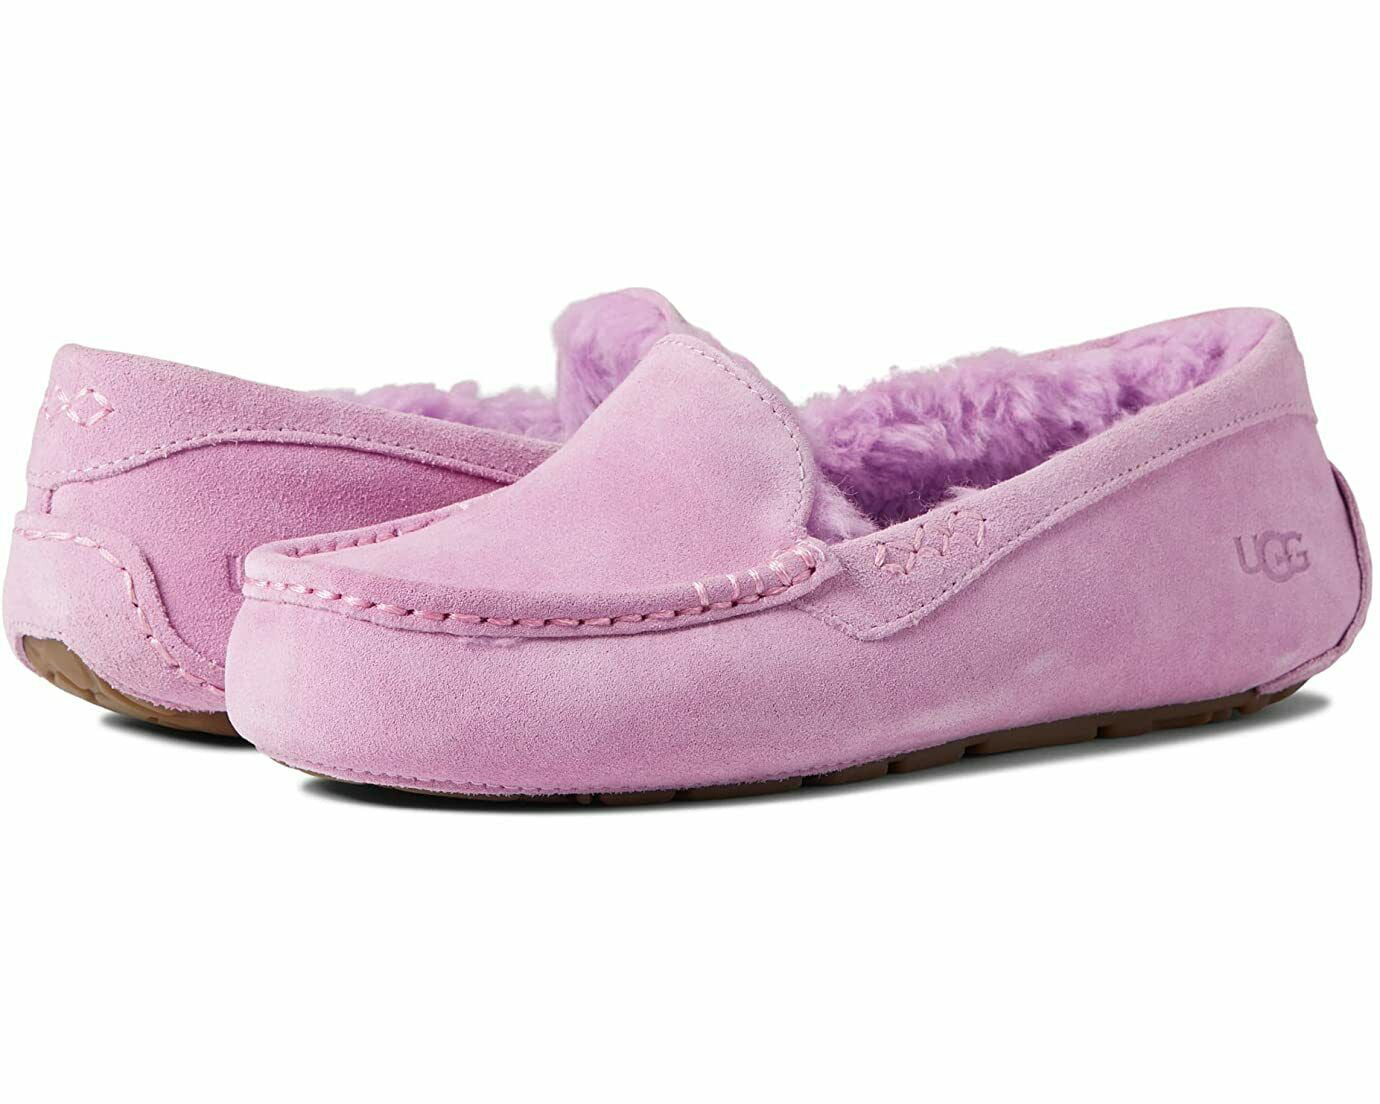 UGG Women's Ansley Suede Moccasin Slippers 1106878 - Walmart.com